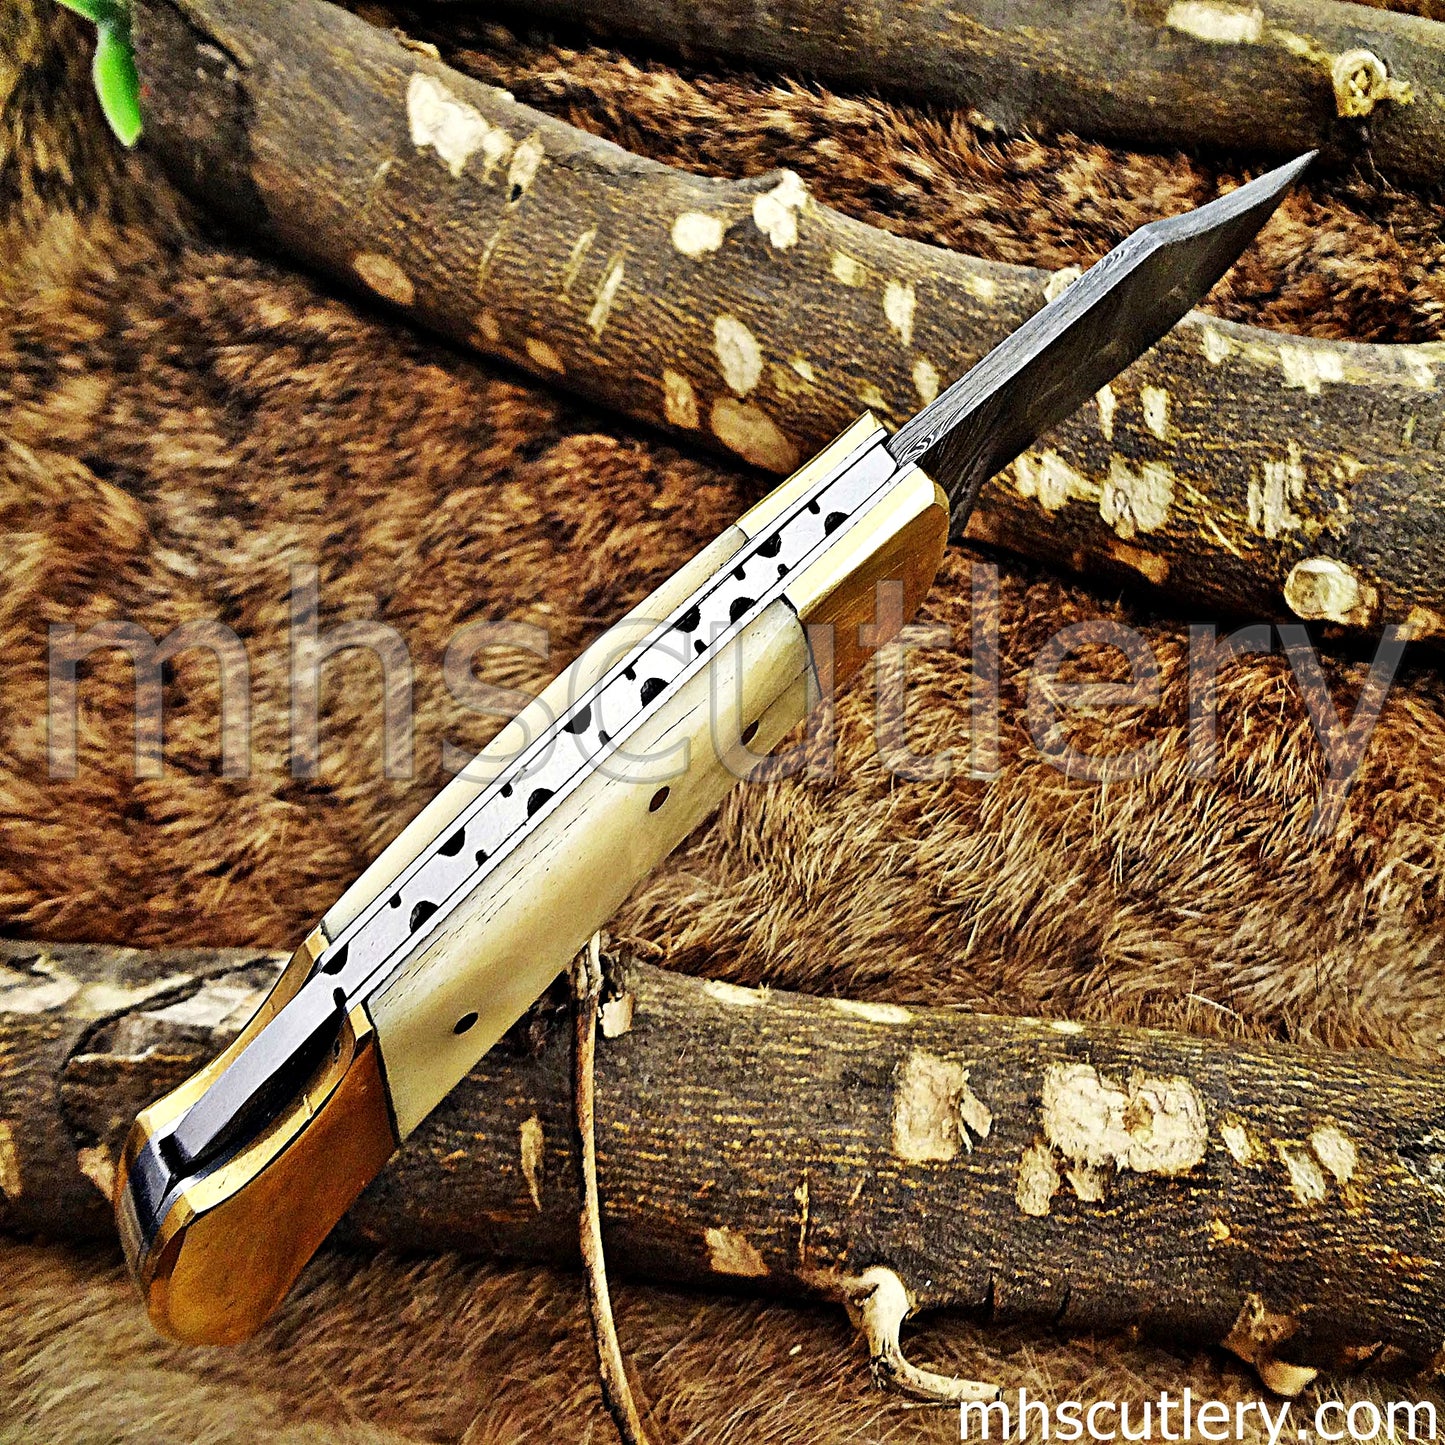 Custom Handmade Damascus Steel Buck Folder Knife | mhscutlery